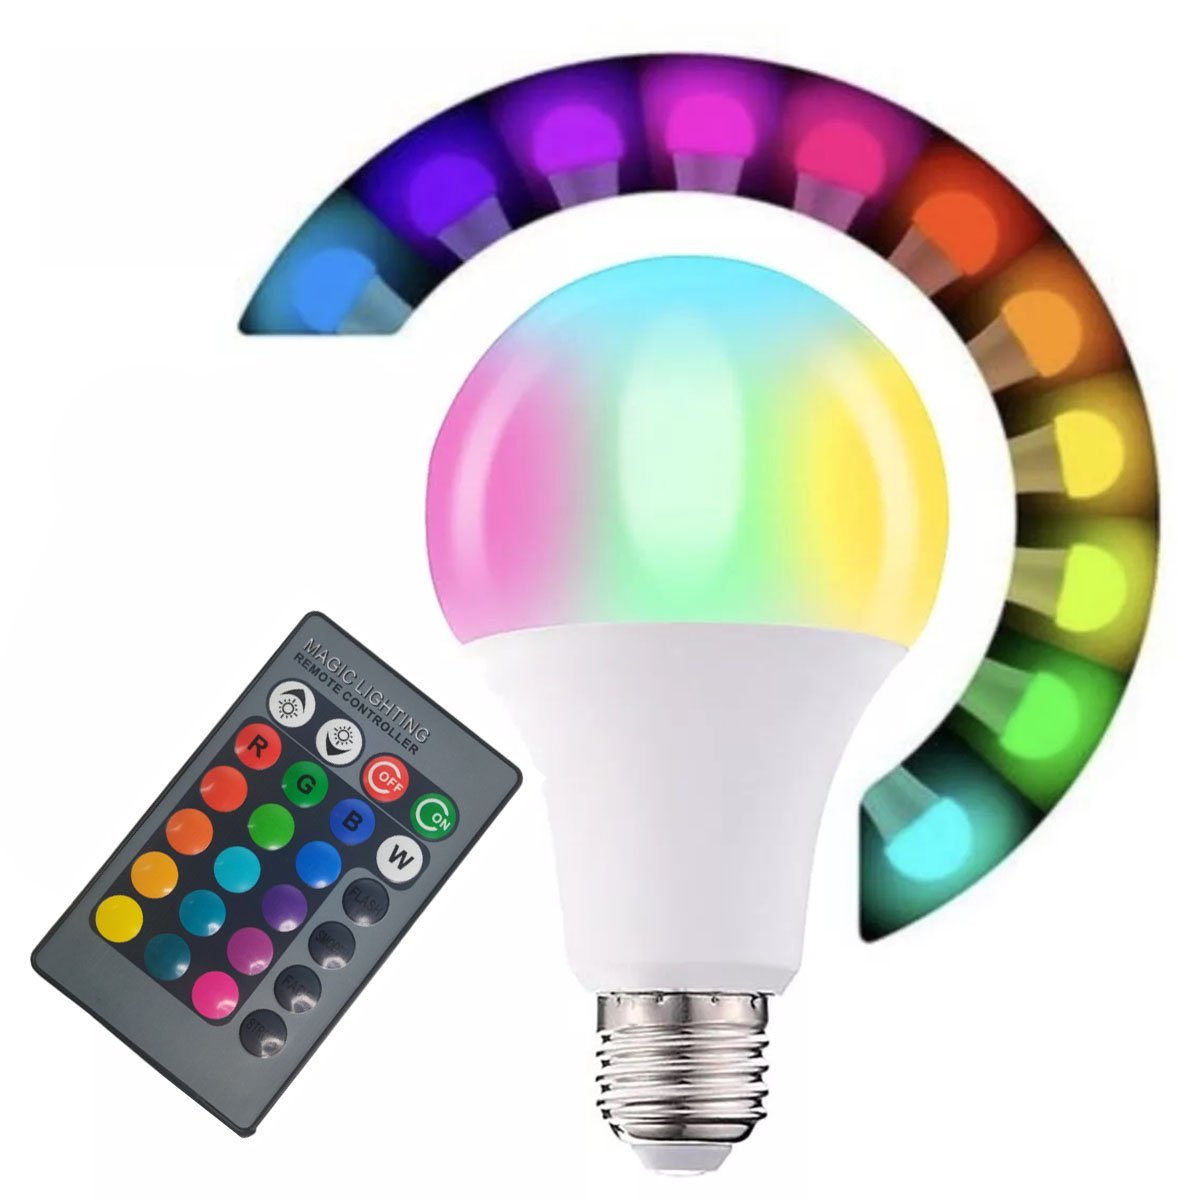 Lampada Led Bulbo 16 Cores RGB 9W Colorida Controle Remoto Luzes Decoraçao E27 Luminaria Abajur Casa - 6